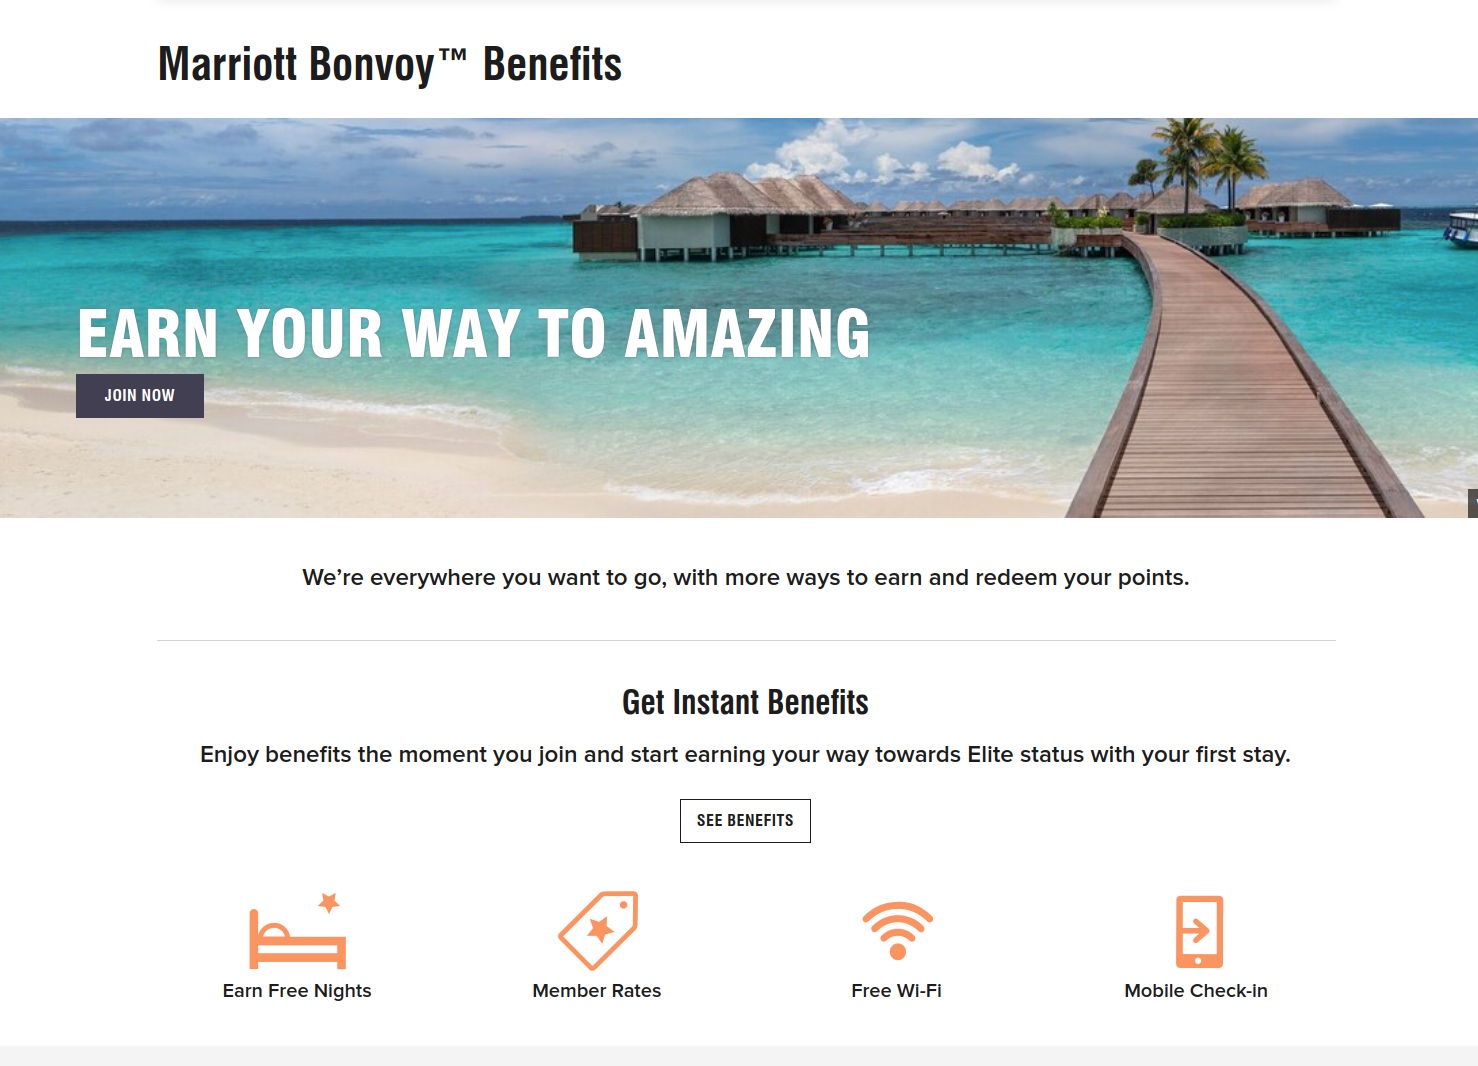 Marriott Bonvoy Loyalty Benefits